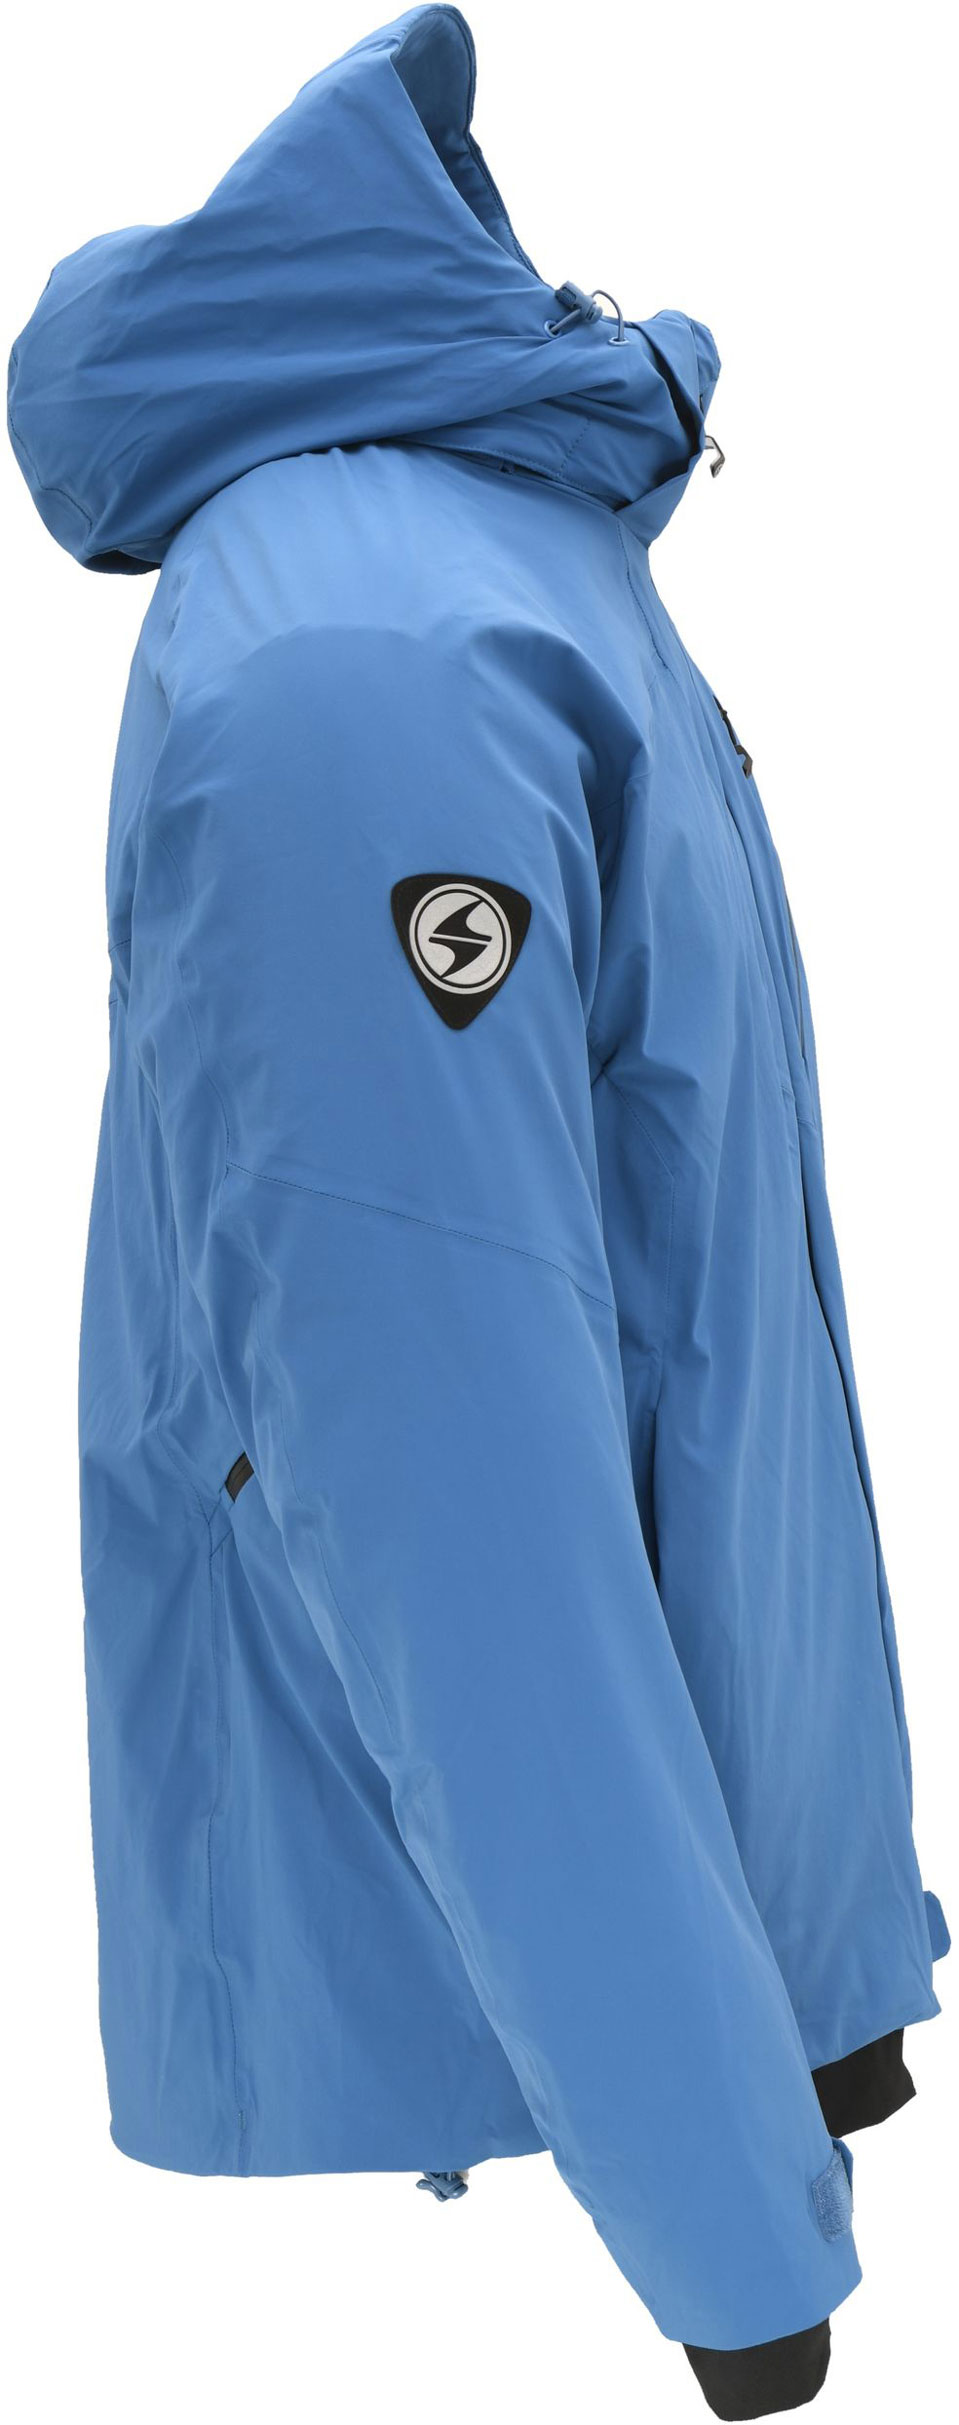 Куртка горнолыжная Blizzard Ski Jacket Silvretta Petroleum, размер L - фото 3